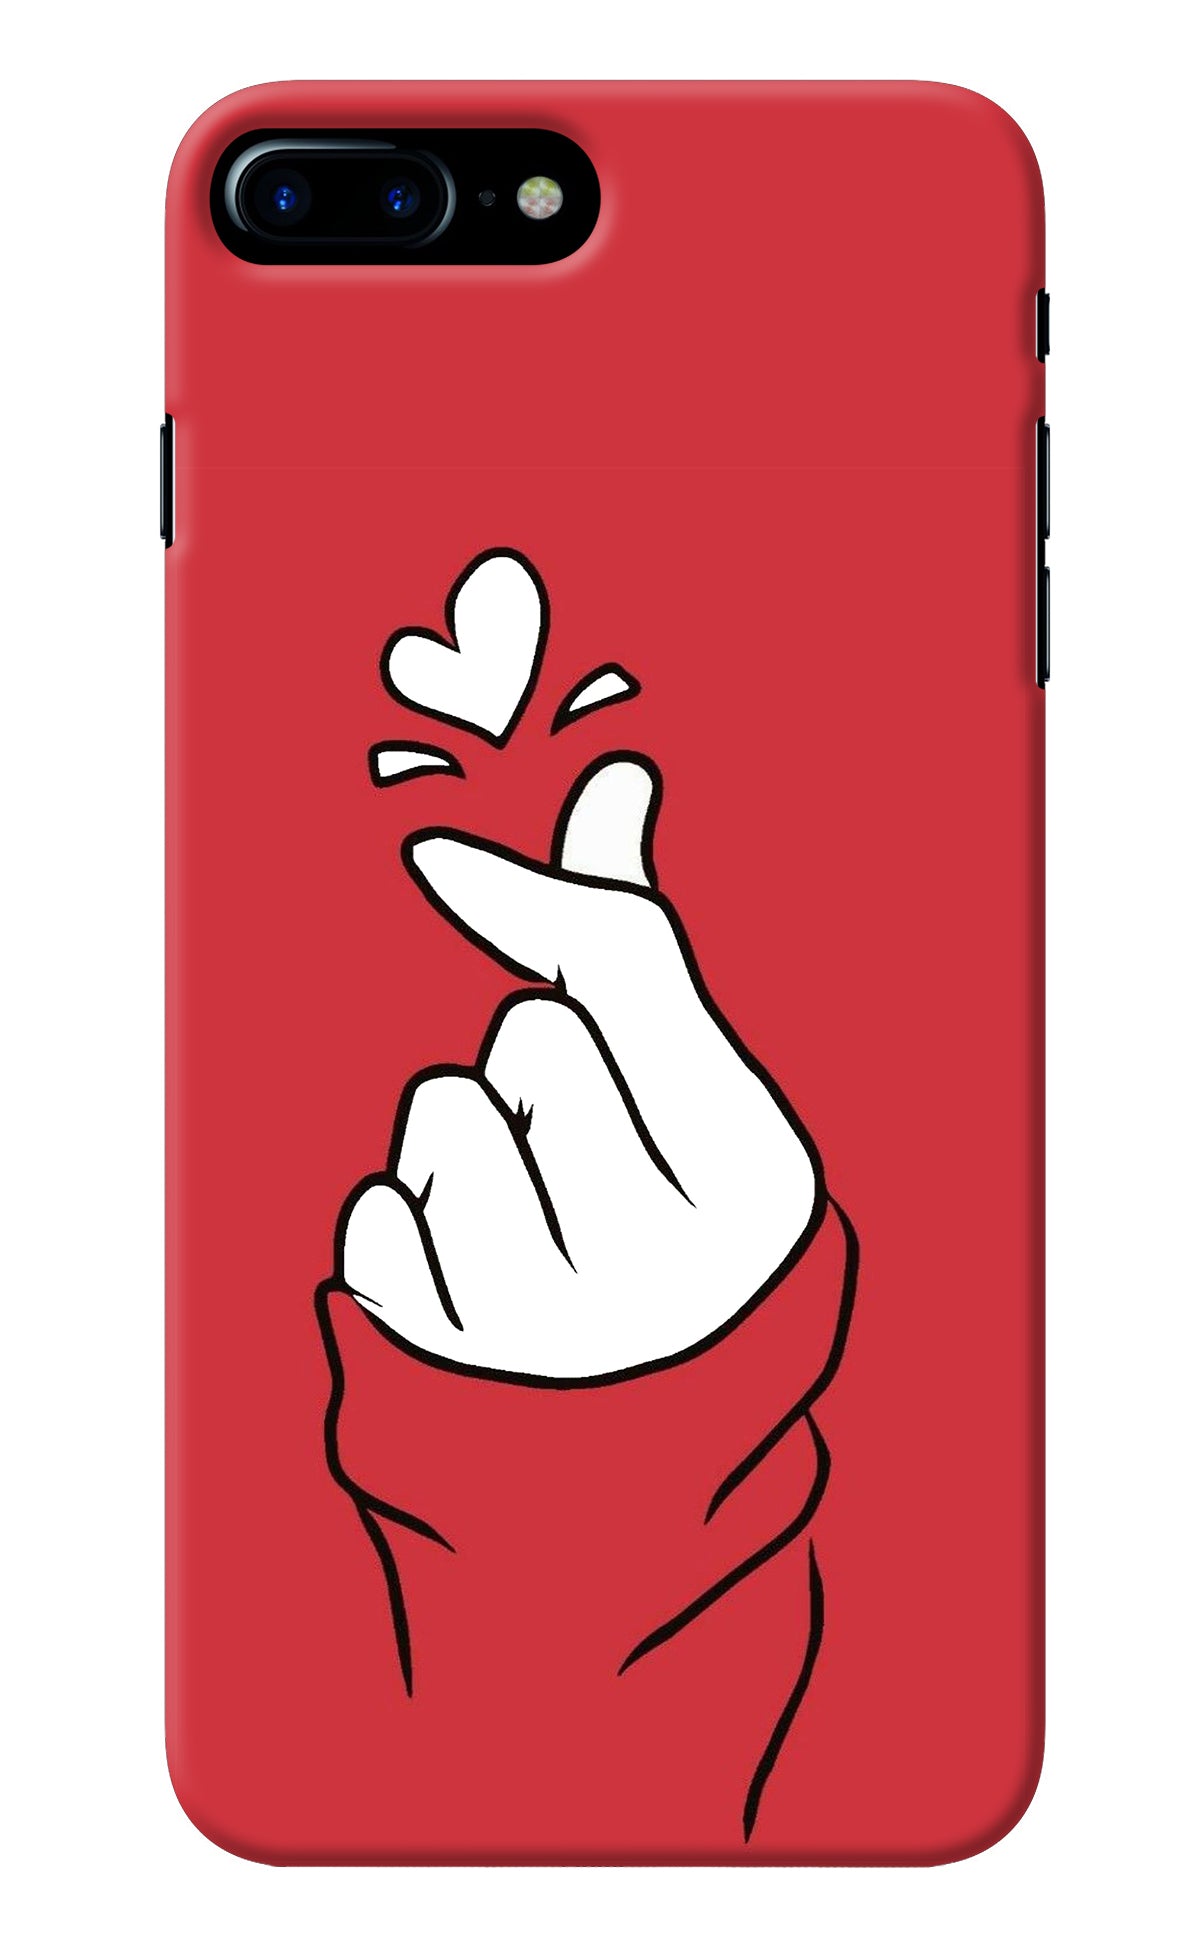 Korean Love Sign iPhone 7 Plus Back Cover